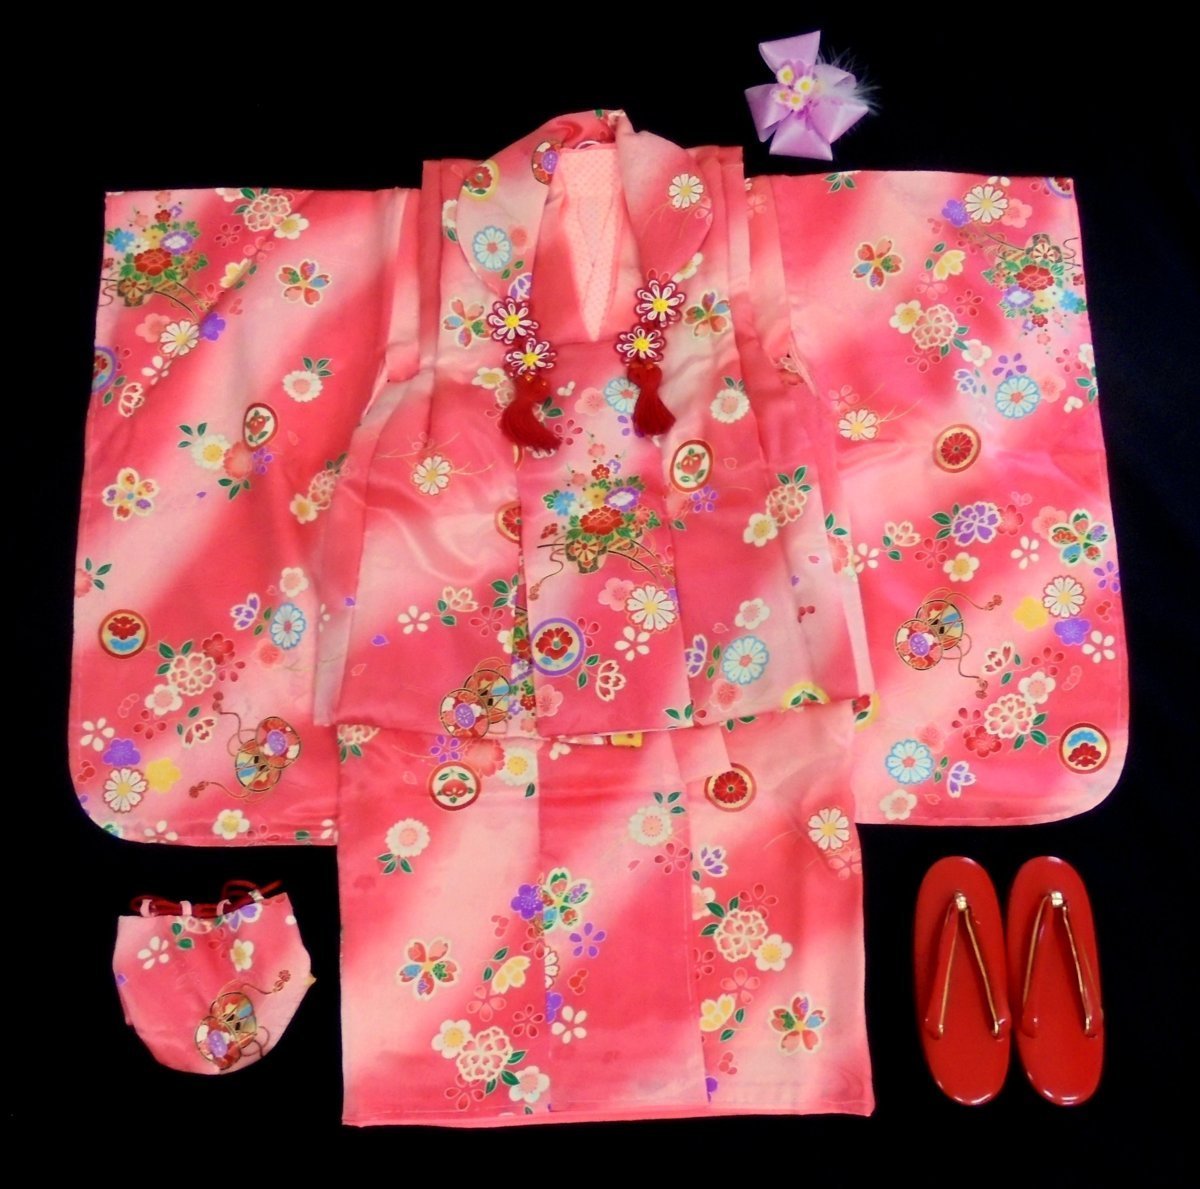 5613　七五三 正絹 被布セット 3歳 女の子「赤紅・桜/花車/鼓」